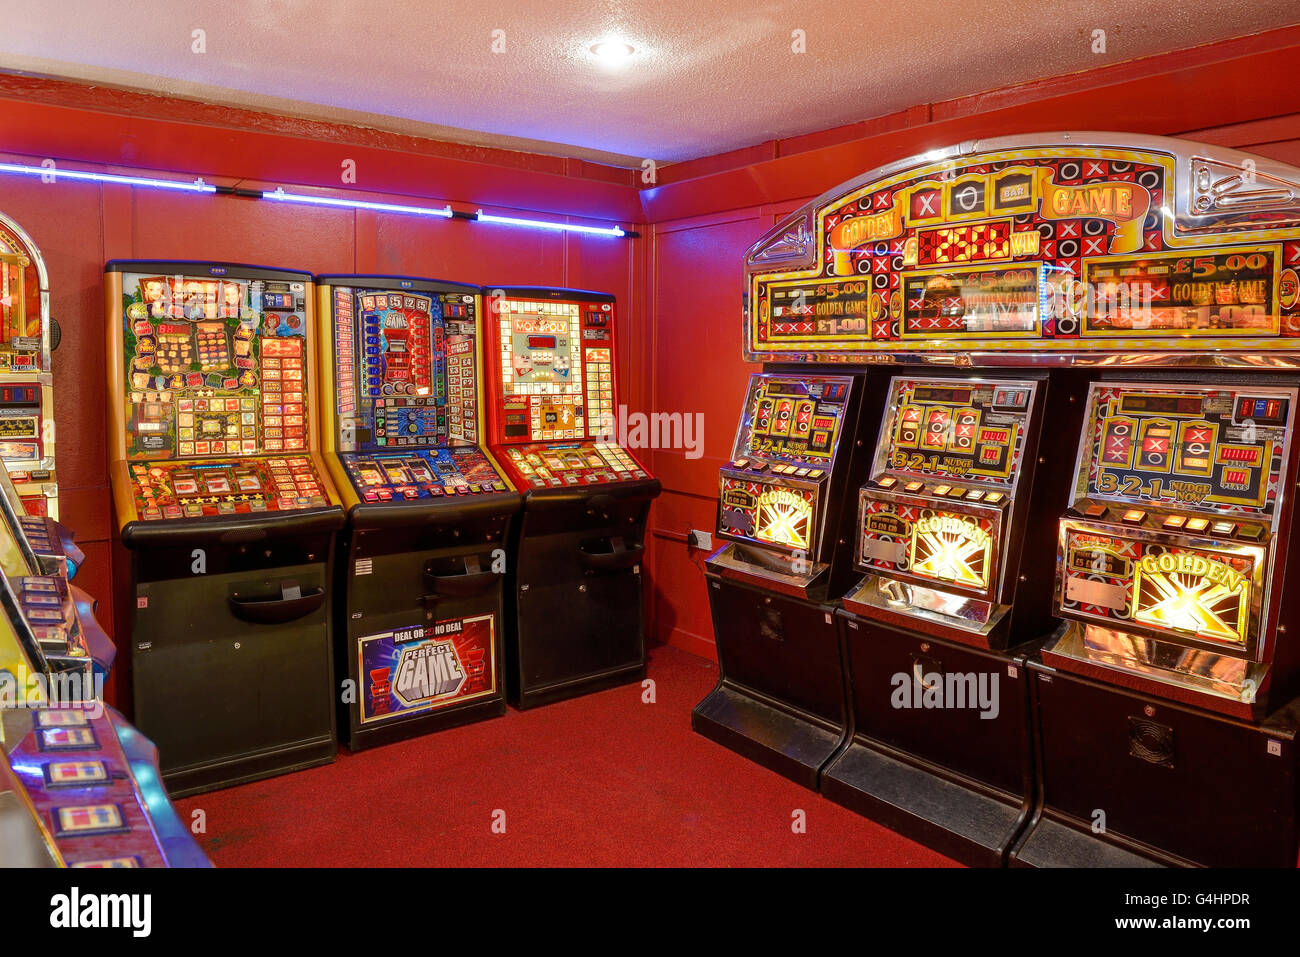 Amusement arcade slot machines Stock Photo